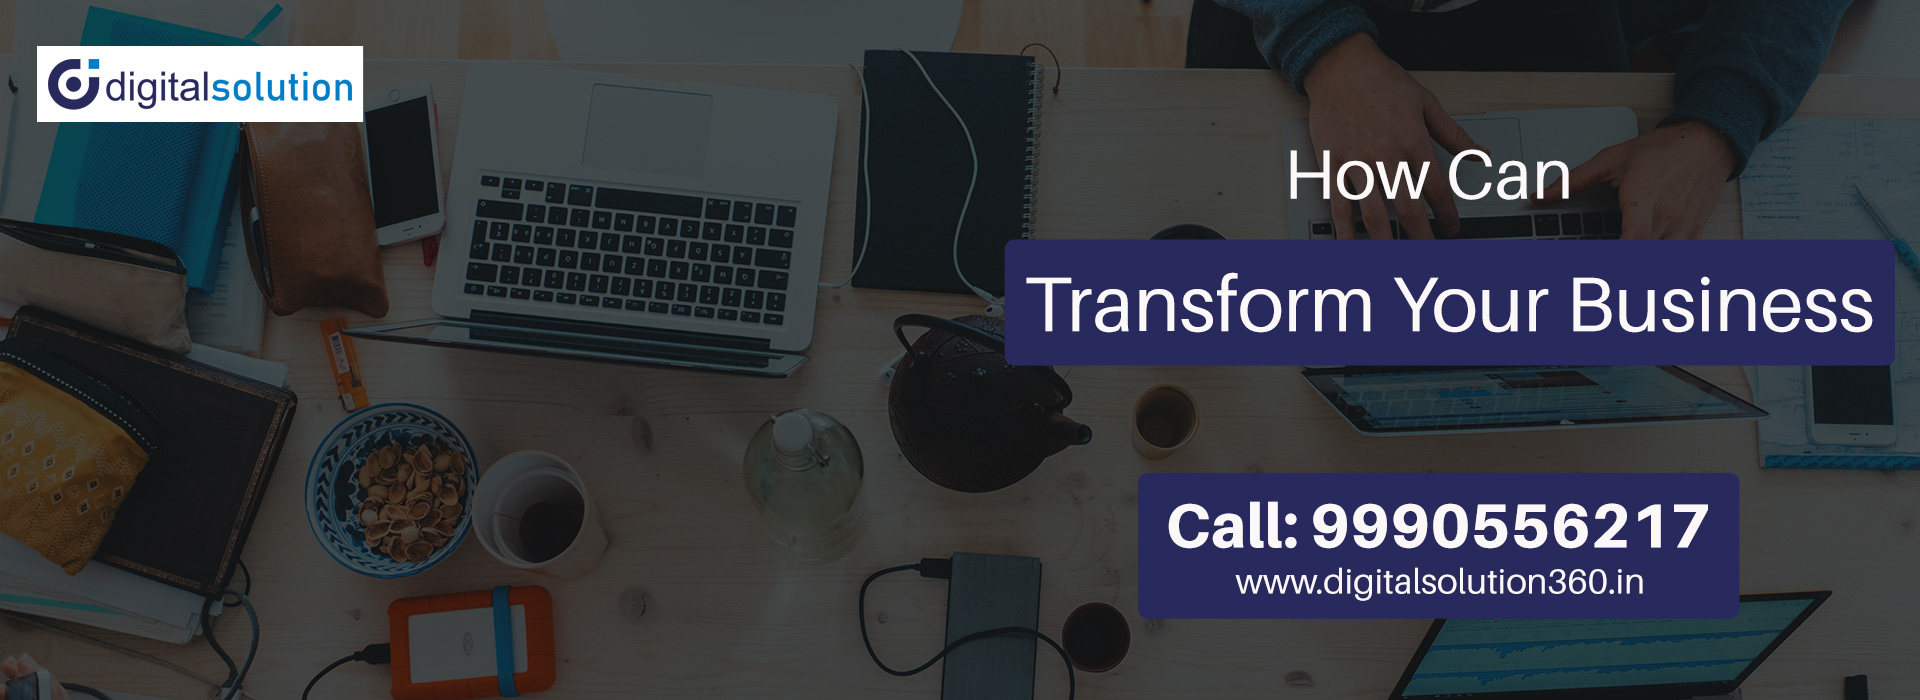 _hocan-transform-your-business.jpg